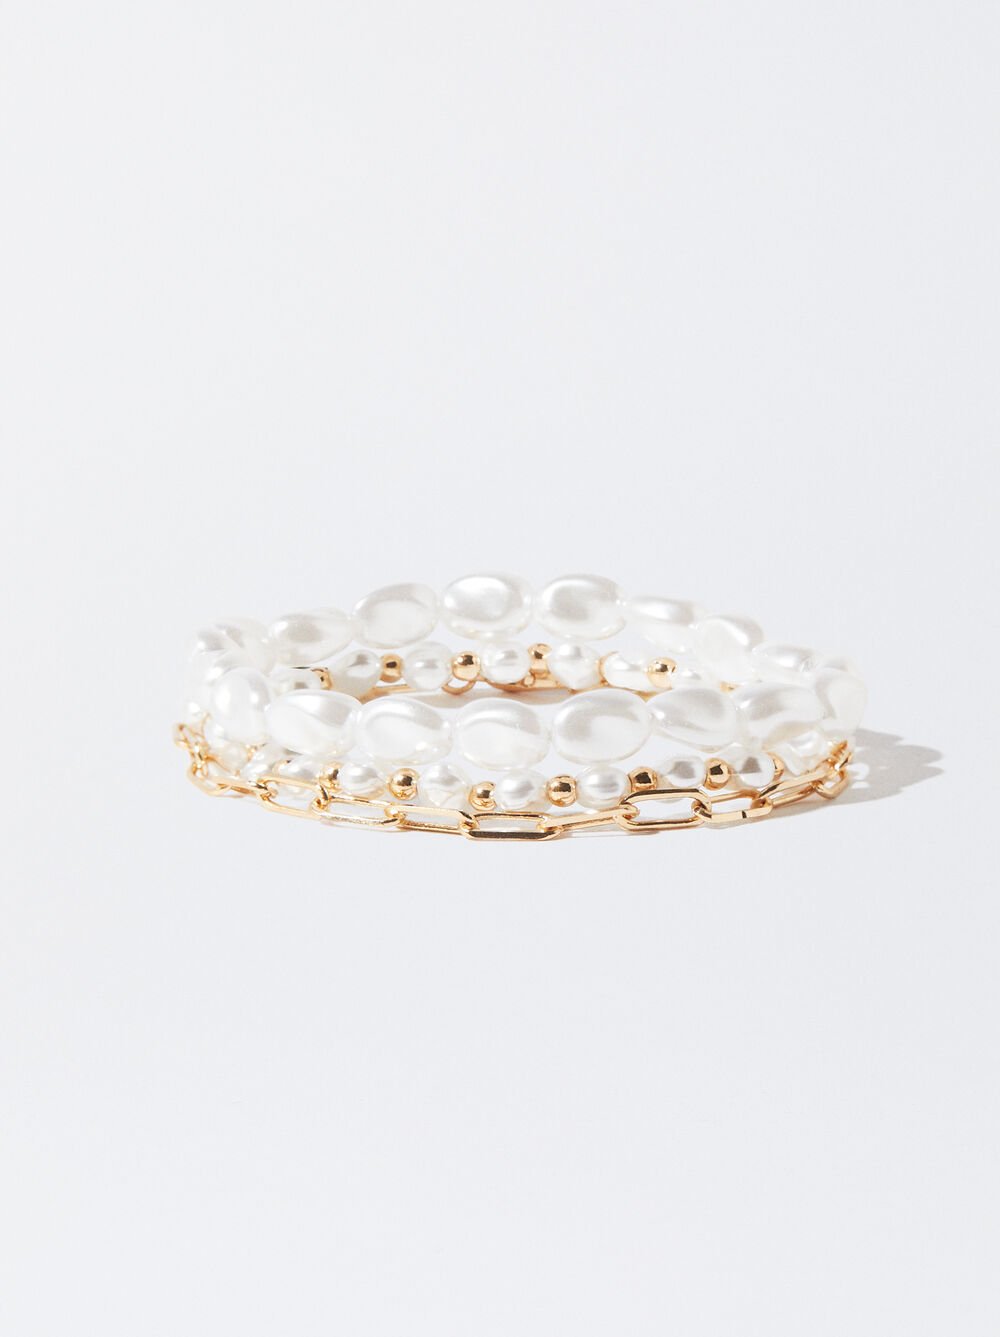 Golden Bracelet With Pearls